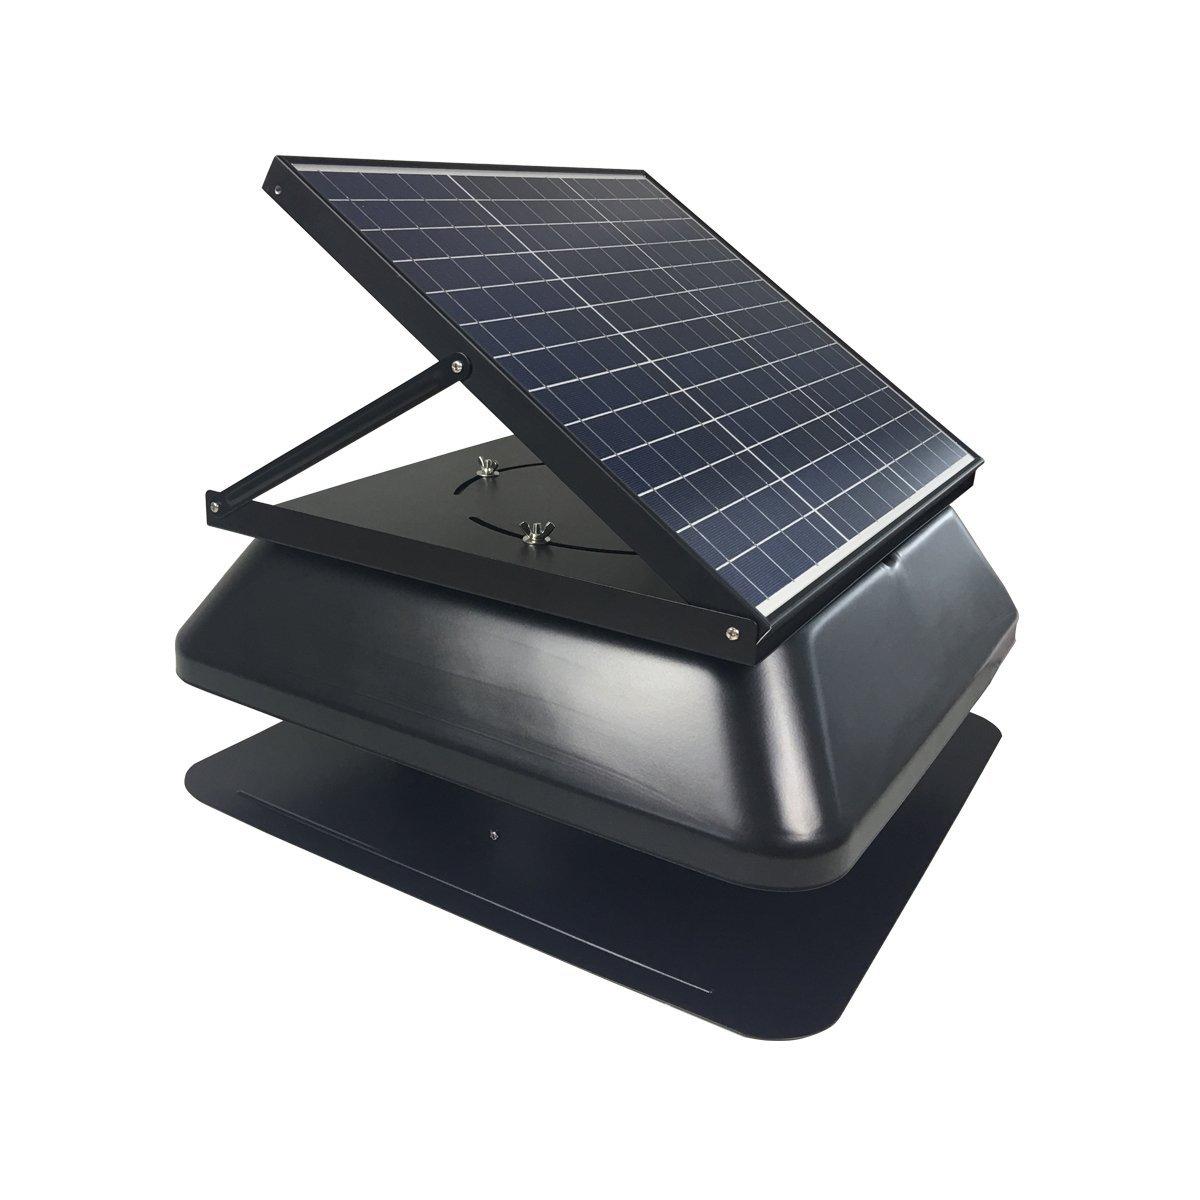 Solar Powered Roof Mount Adjustable Attic Fan